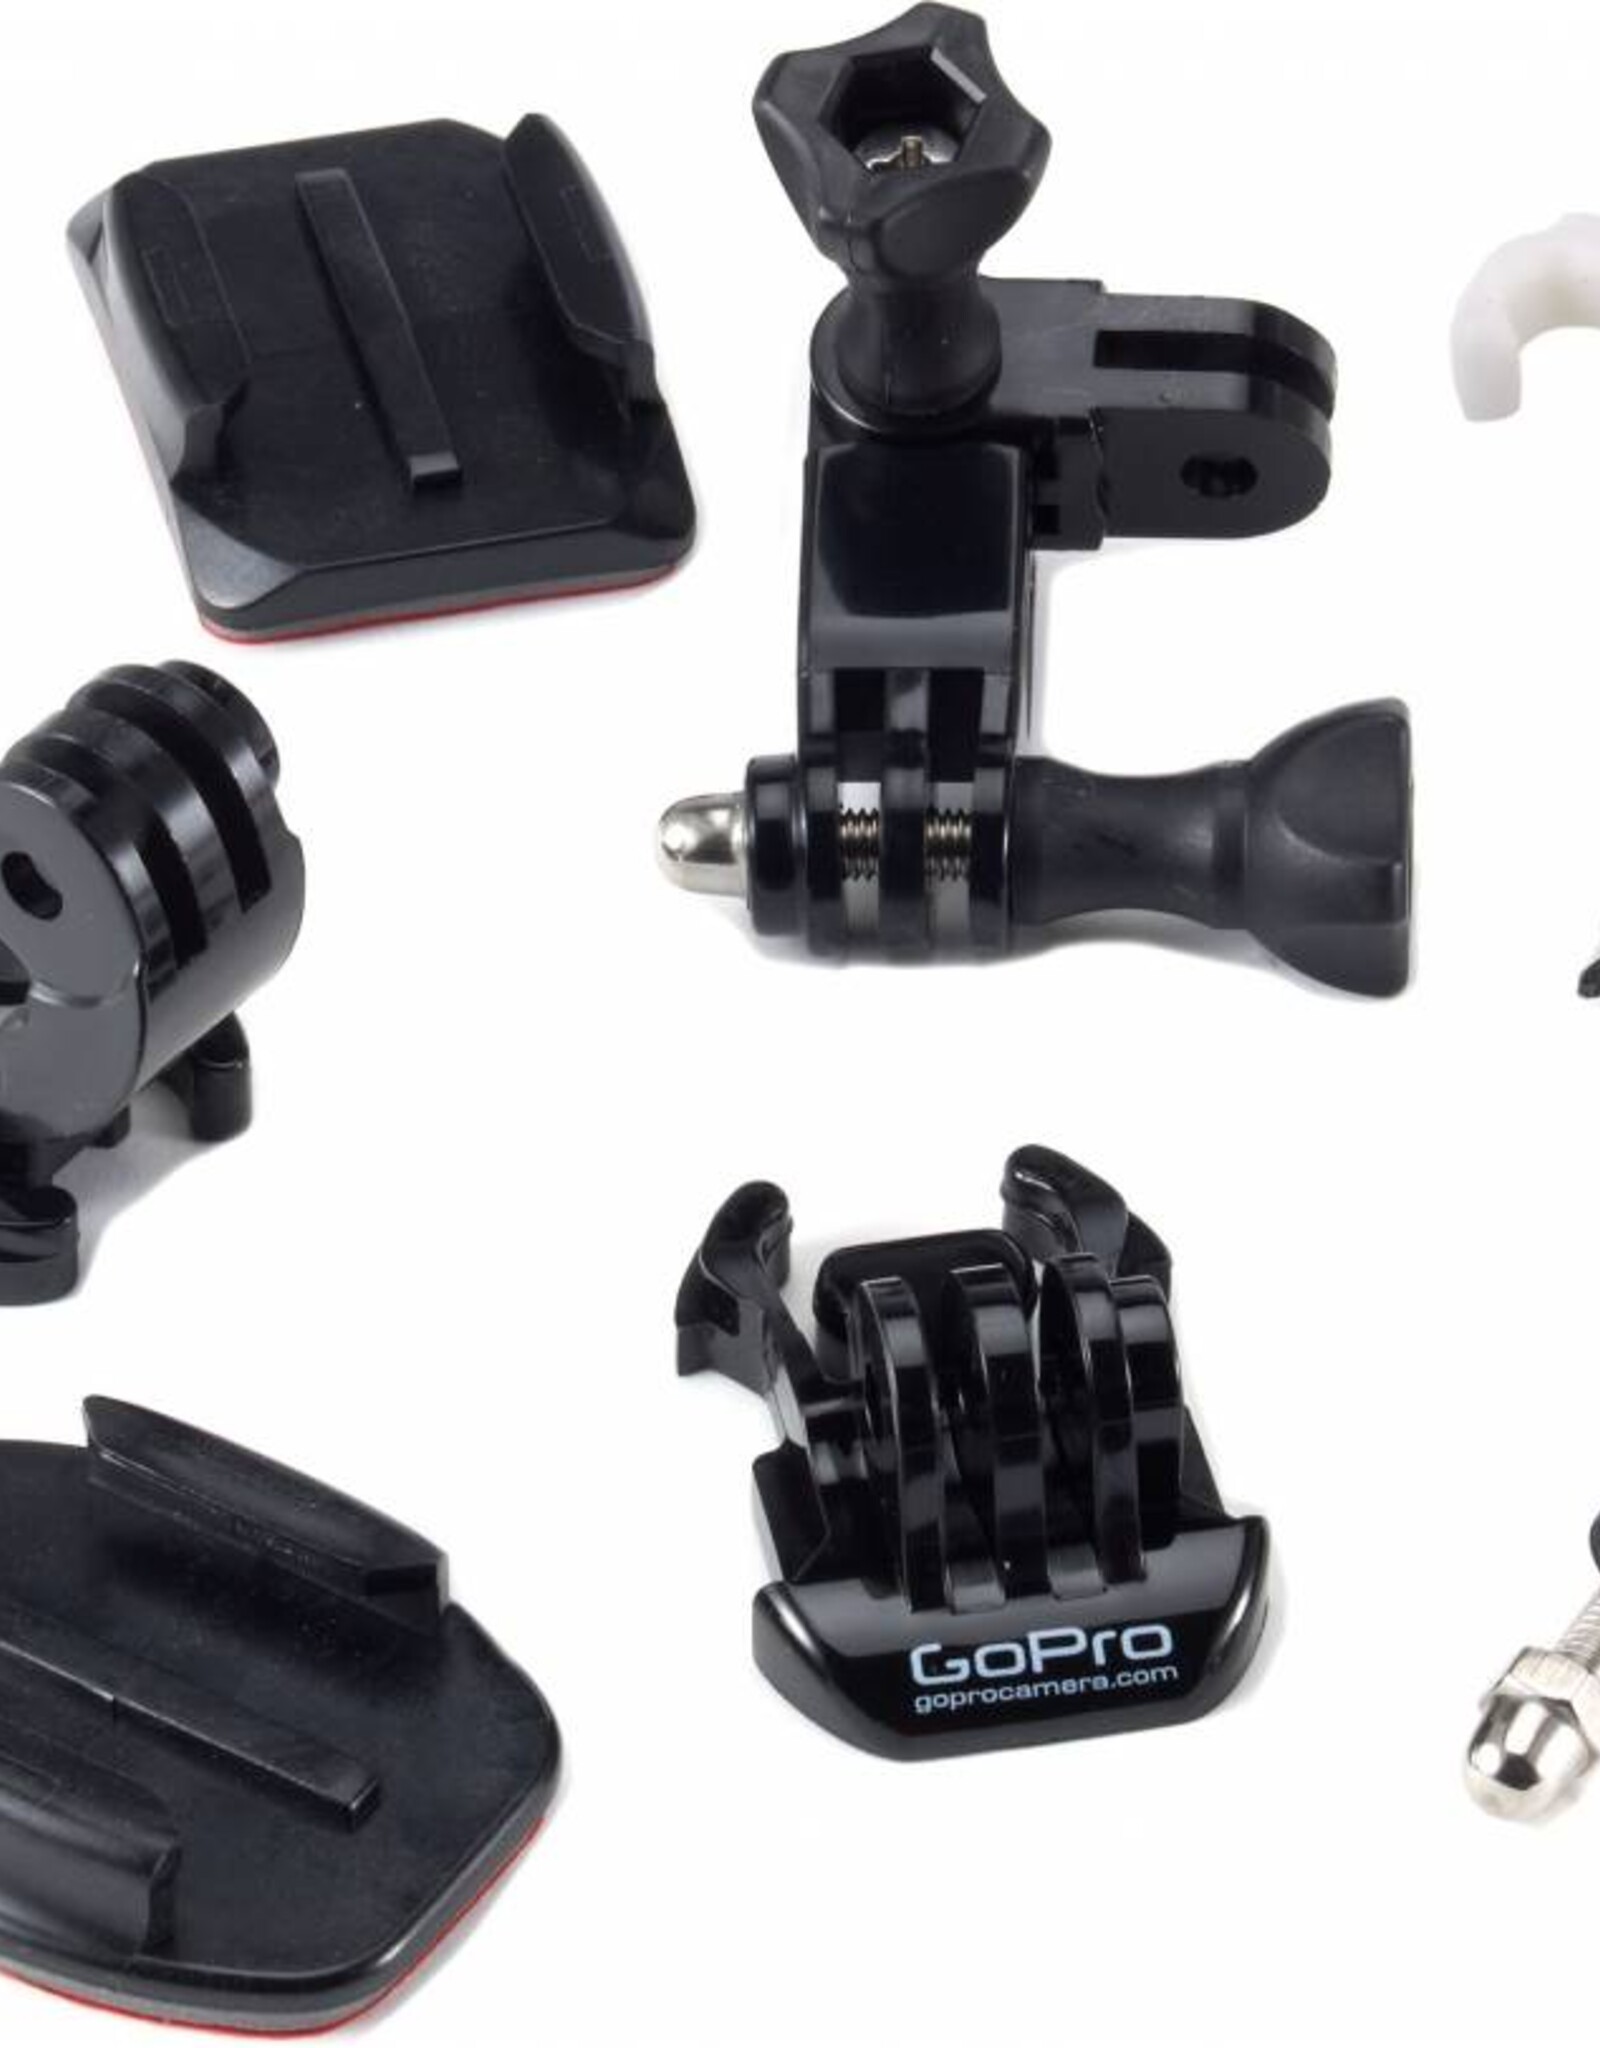 Gopro GoPro Grab Bag of Mounts / Replacement parts